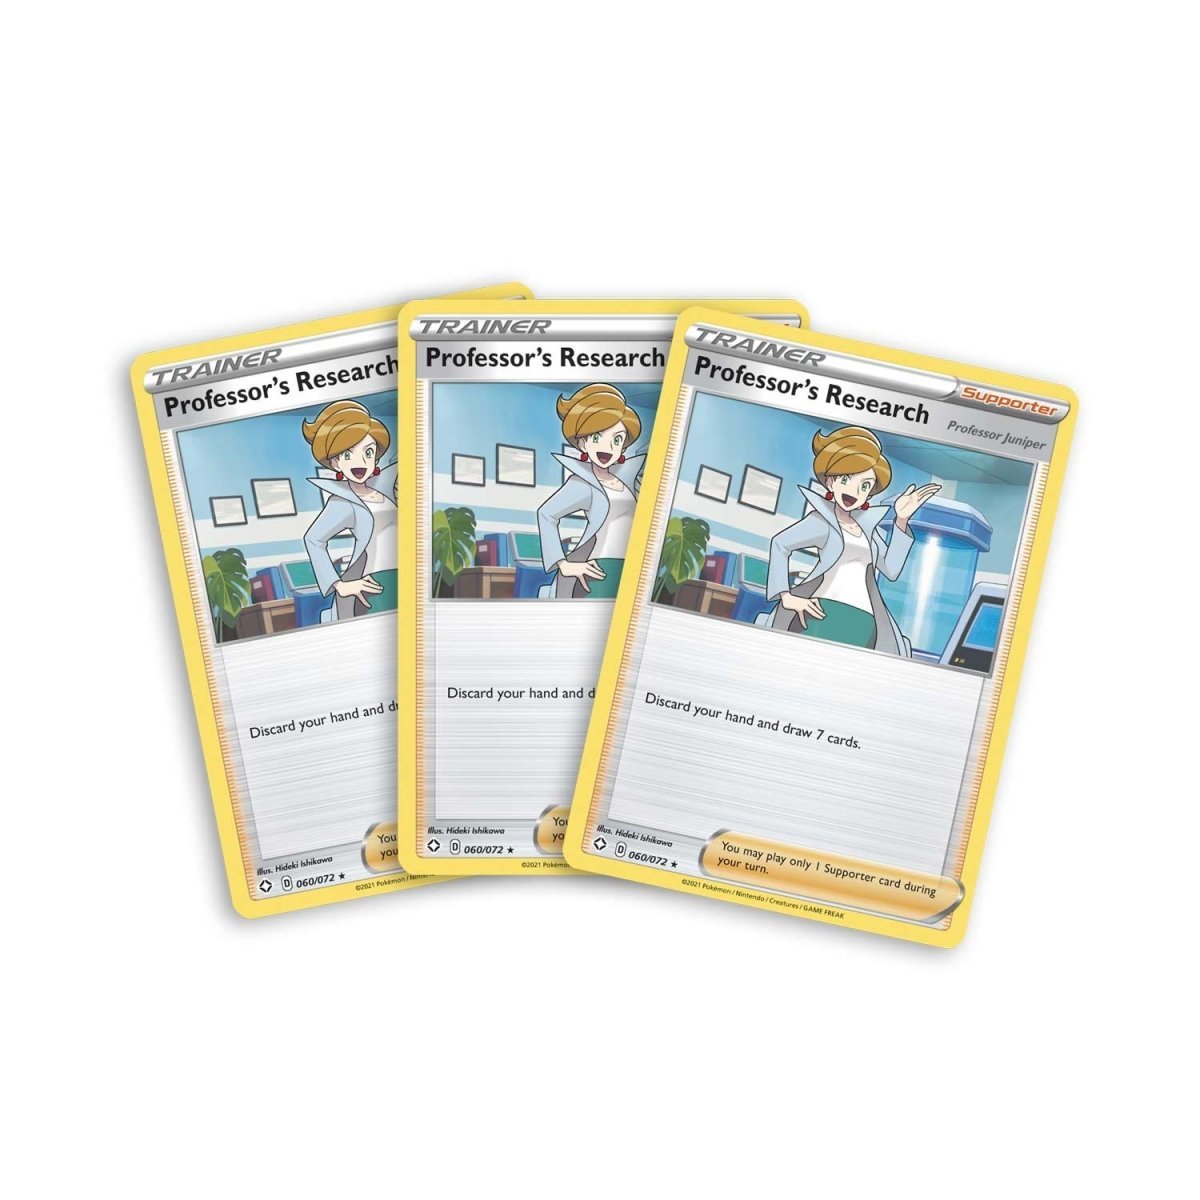 Pokémon TCG: Professor Juniper Premium Tournament Collection - PokeRvm